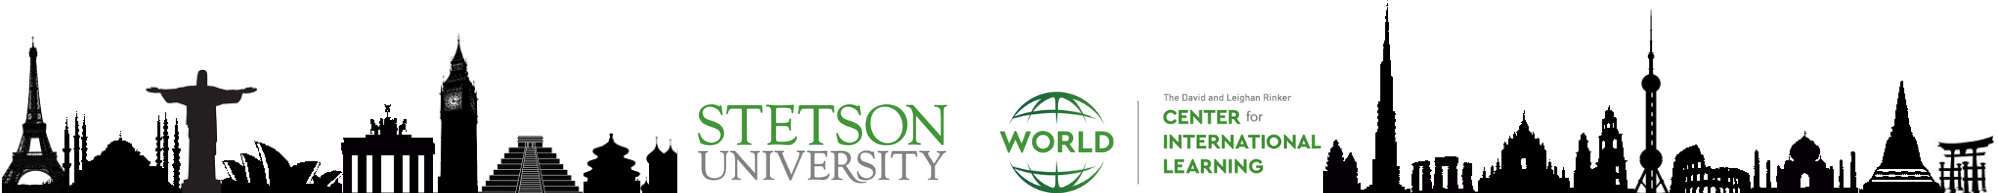 WORLD: The David and Leighan Rinker Center for International Learning at Stetson University - Stetson University